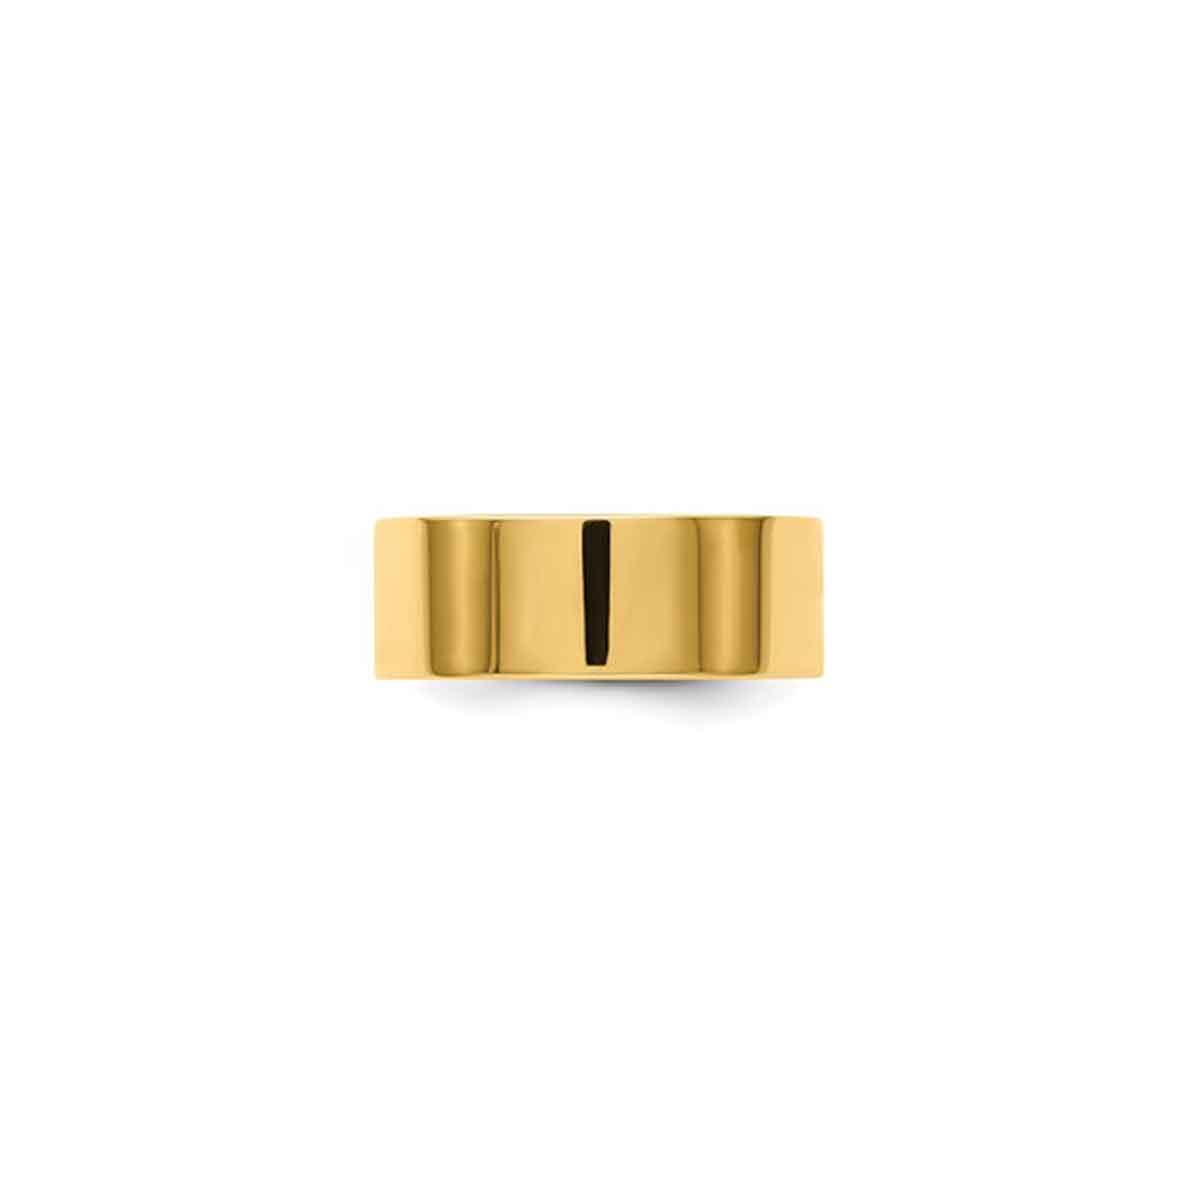 The Austin Gold Flat Wedding Ring | Lisa Robin